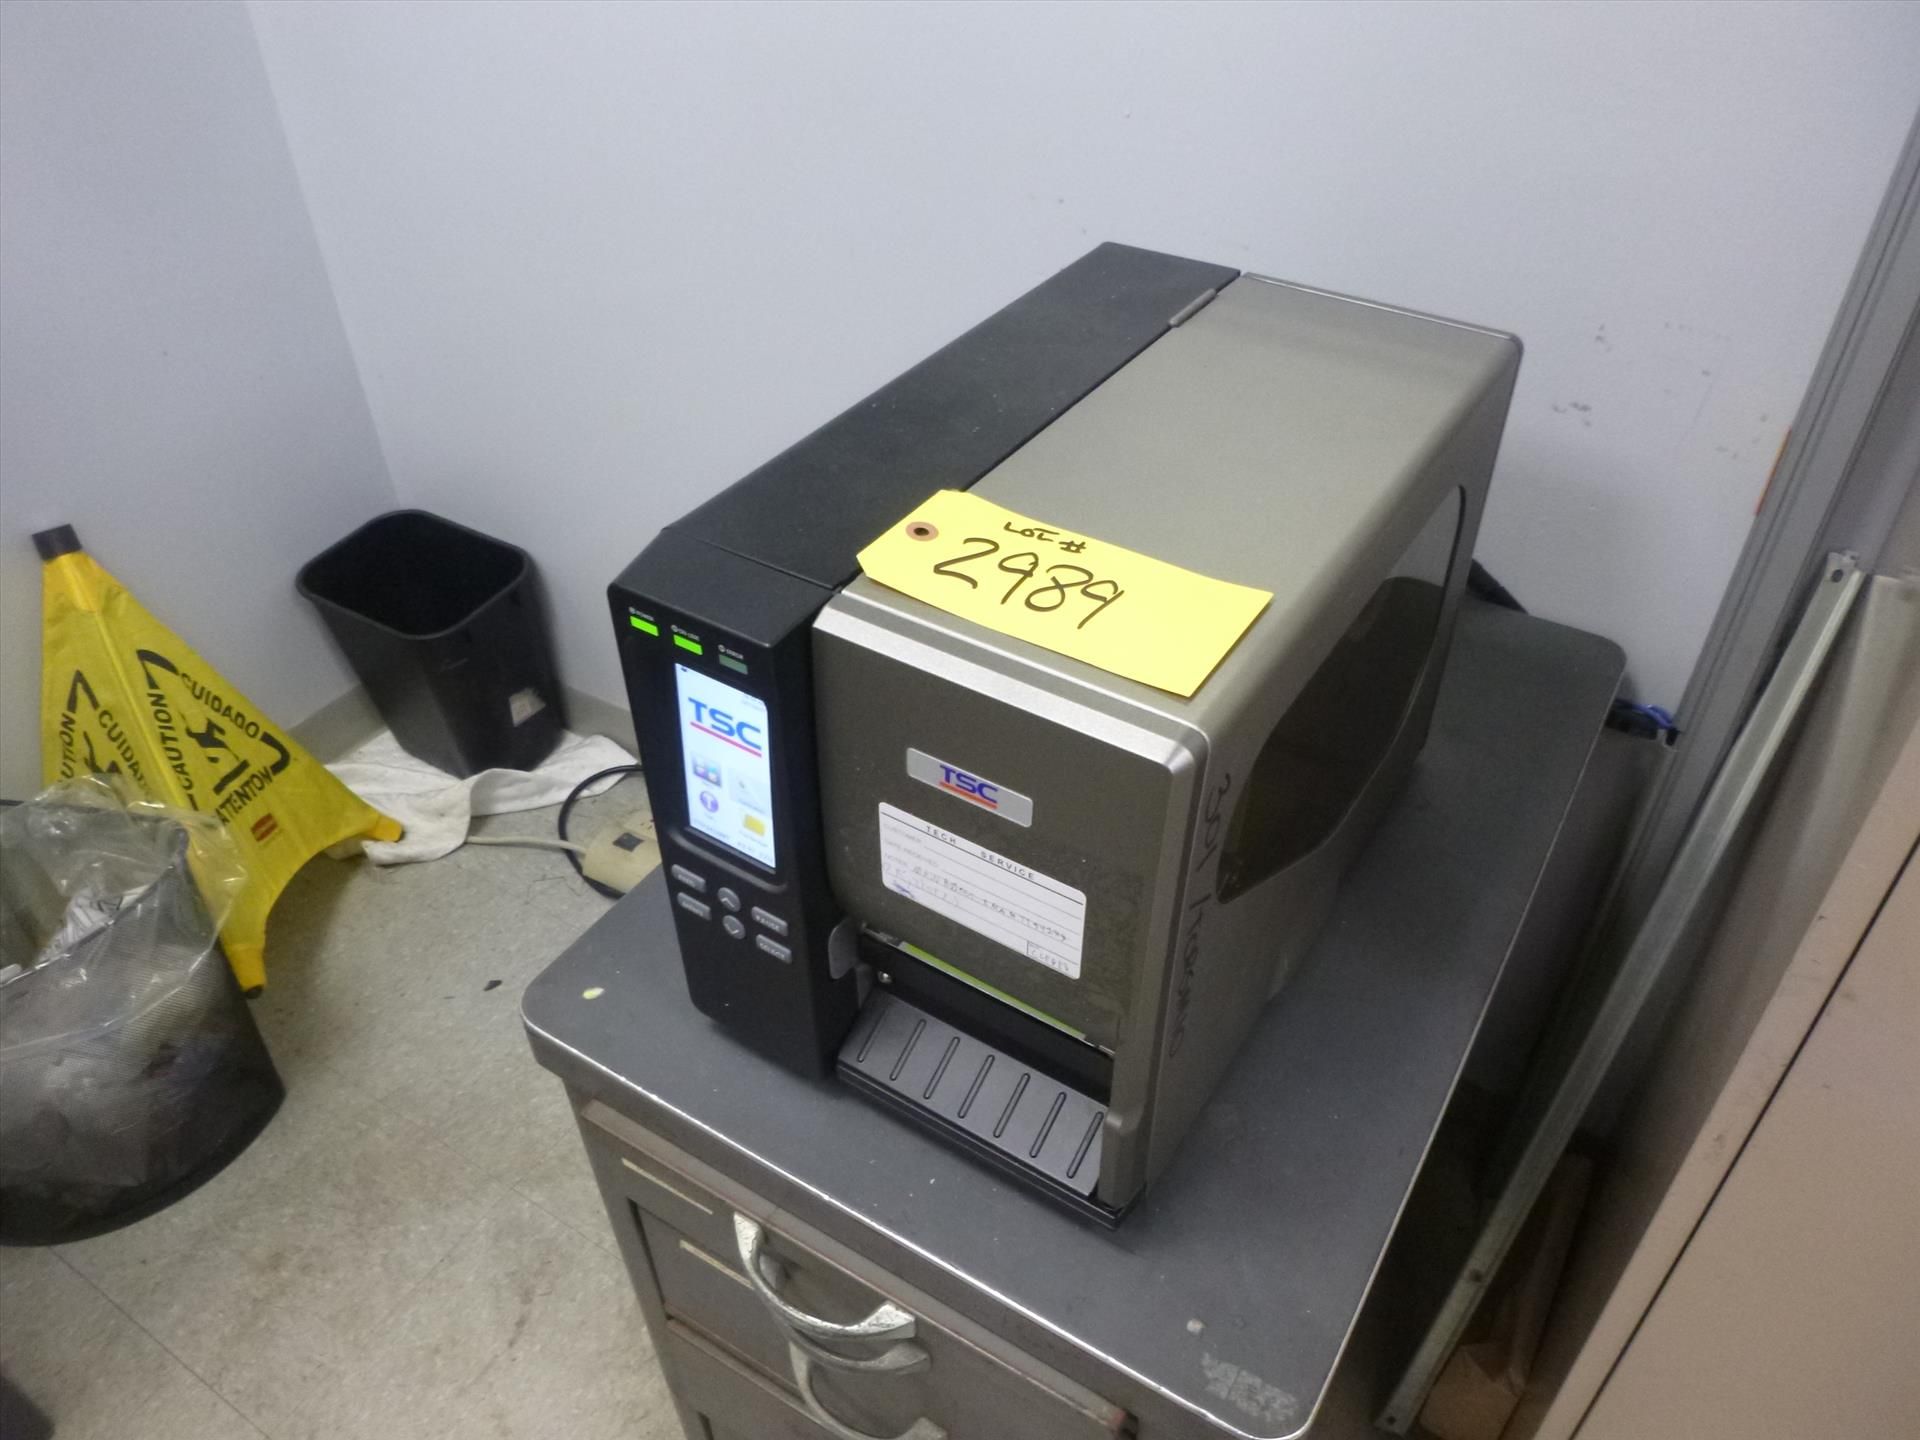 TSC label printer [2nd Floor, LD16]